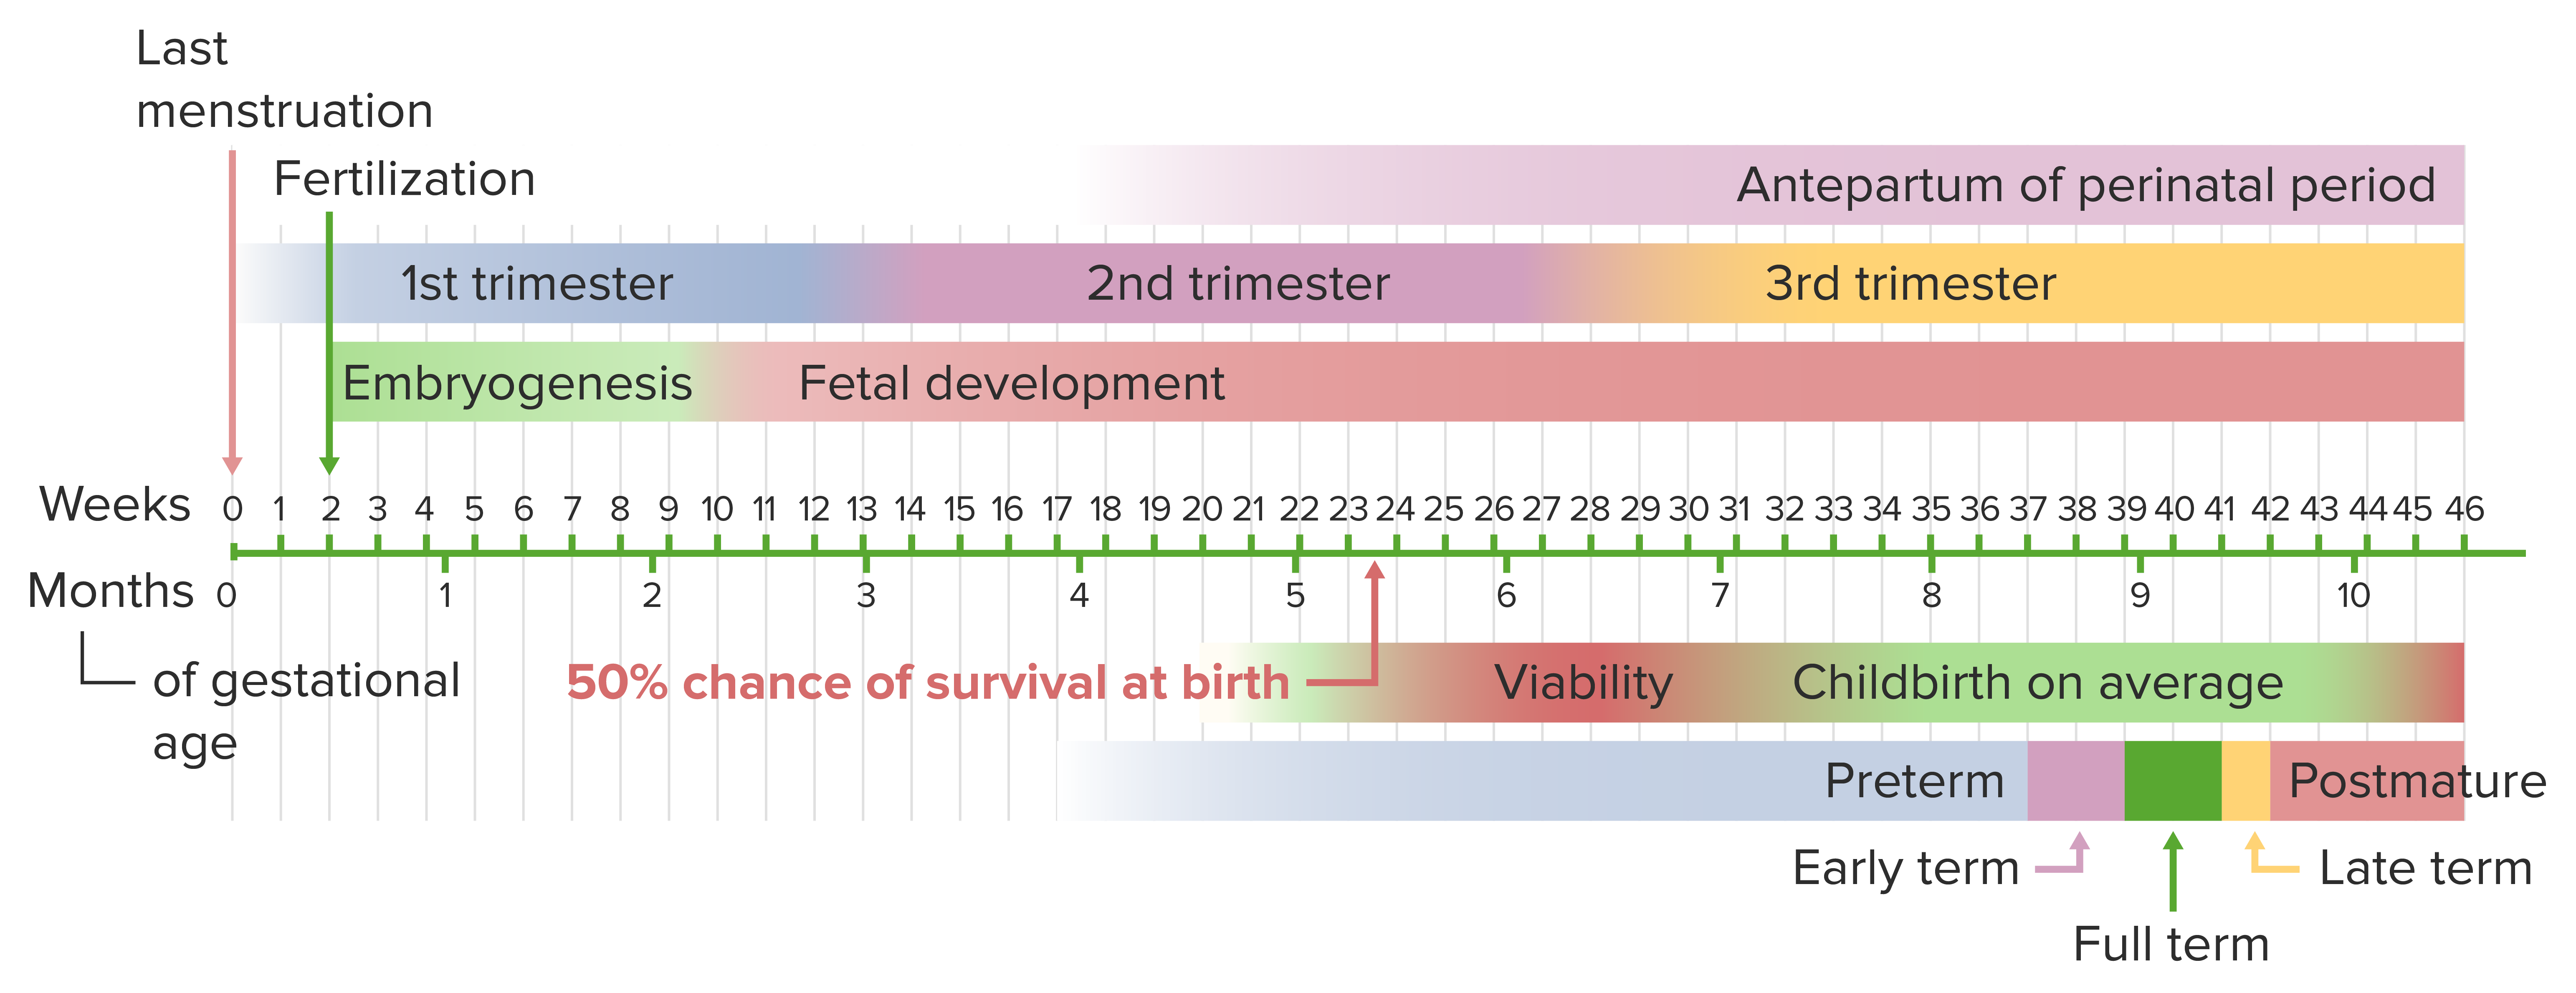 5 sinais de gravidez - segundo nossos antepassados - Blog do MyHeritage